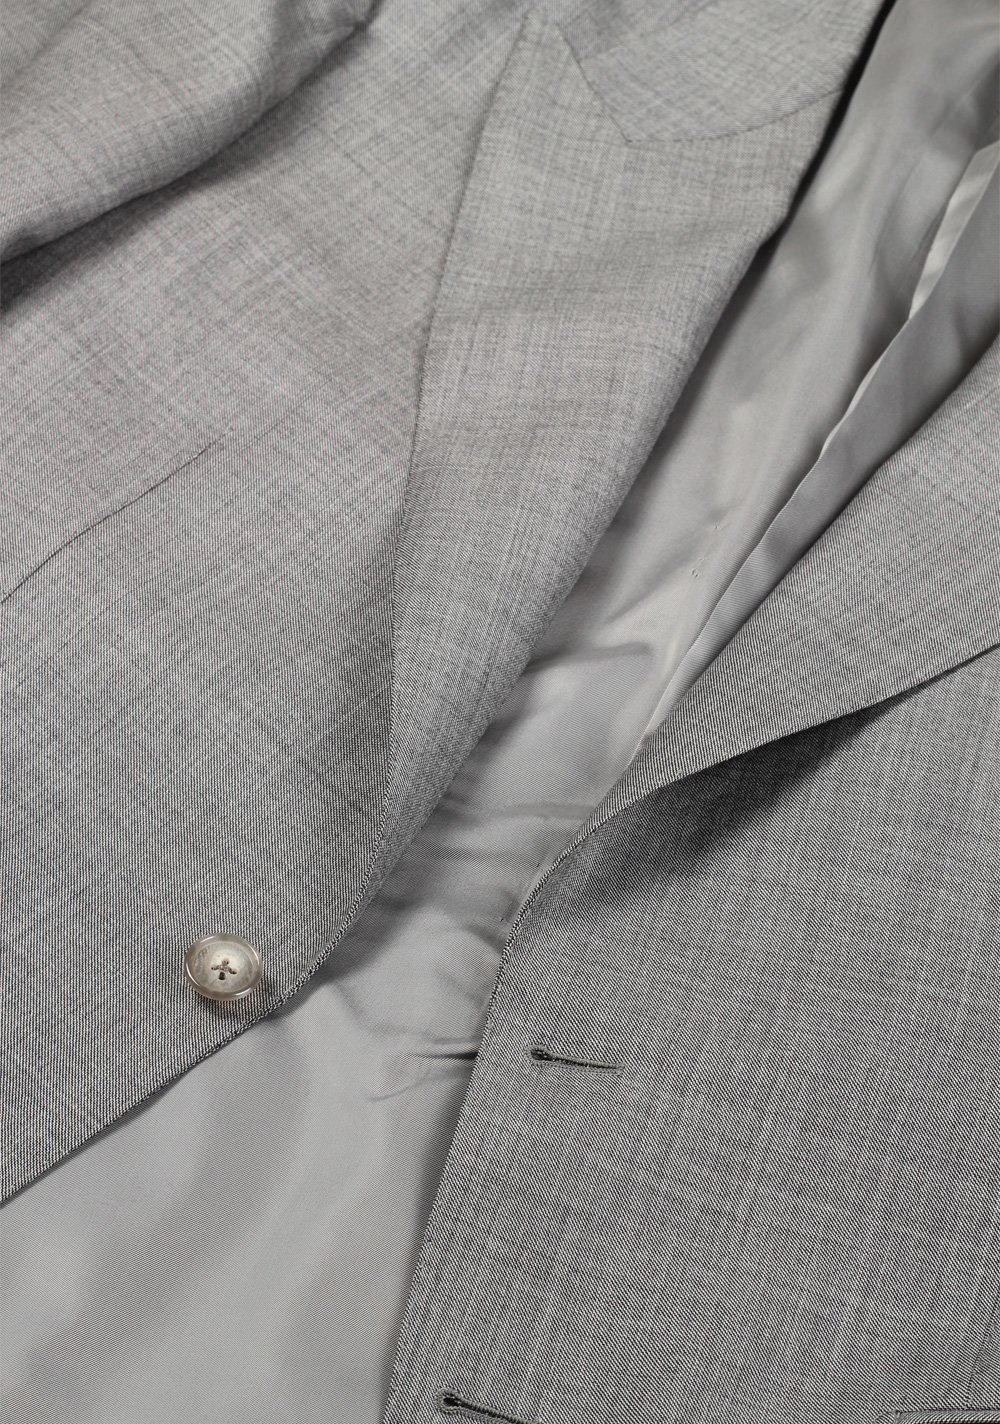 TOM FORD Shelton Sharkskin Light Gray Suit Size 54 / 44R U.S. Wool | Costume Limité